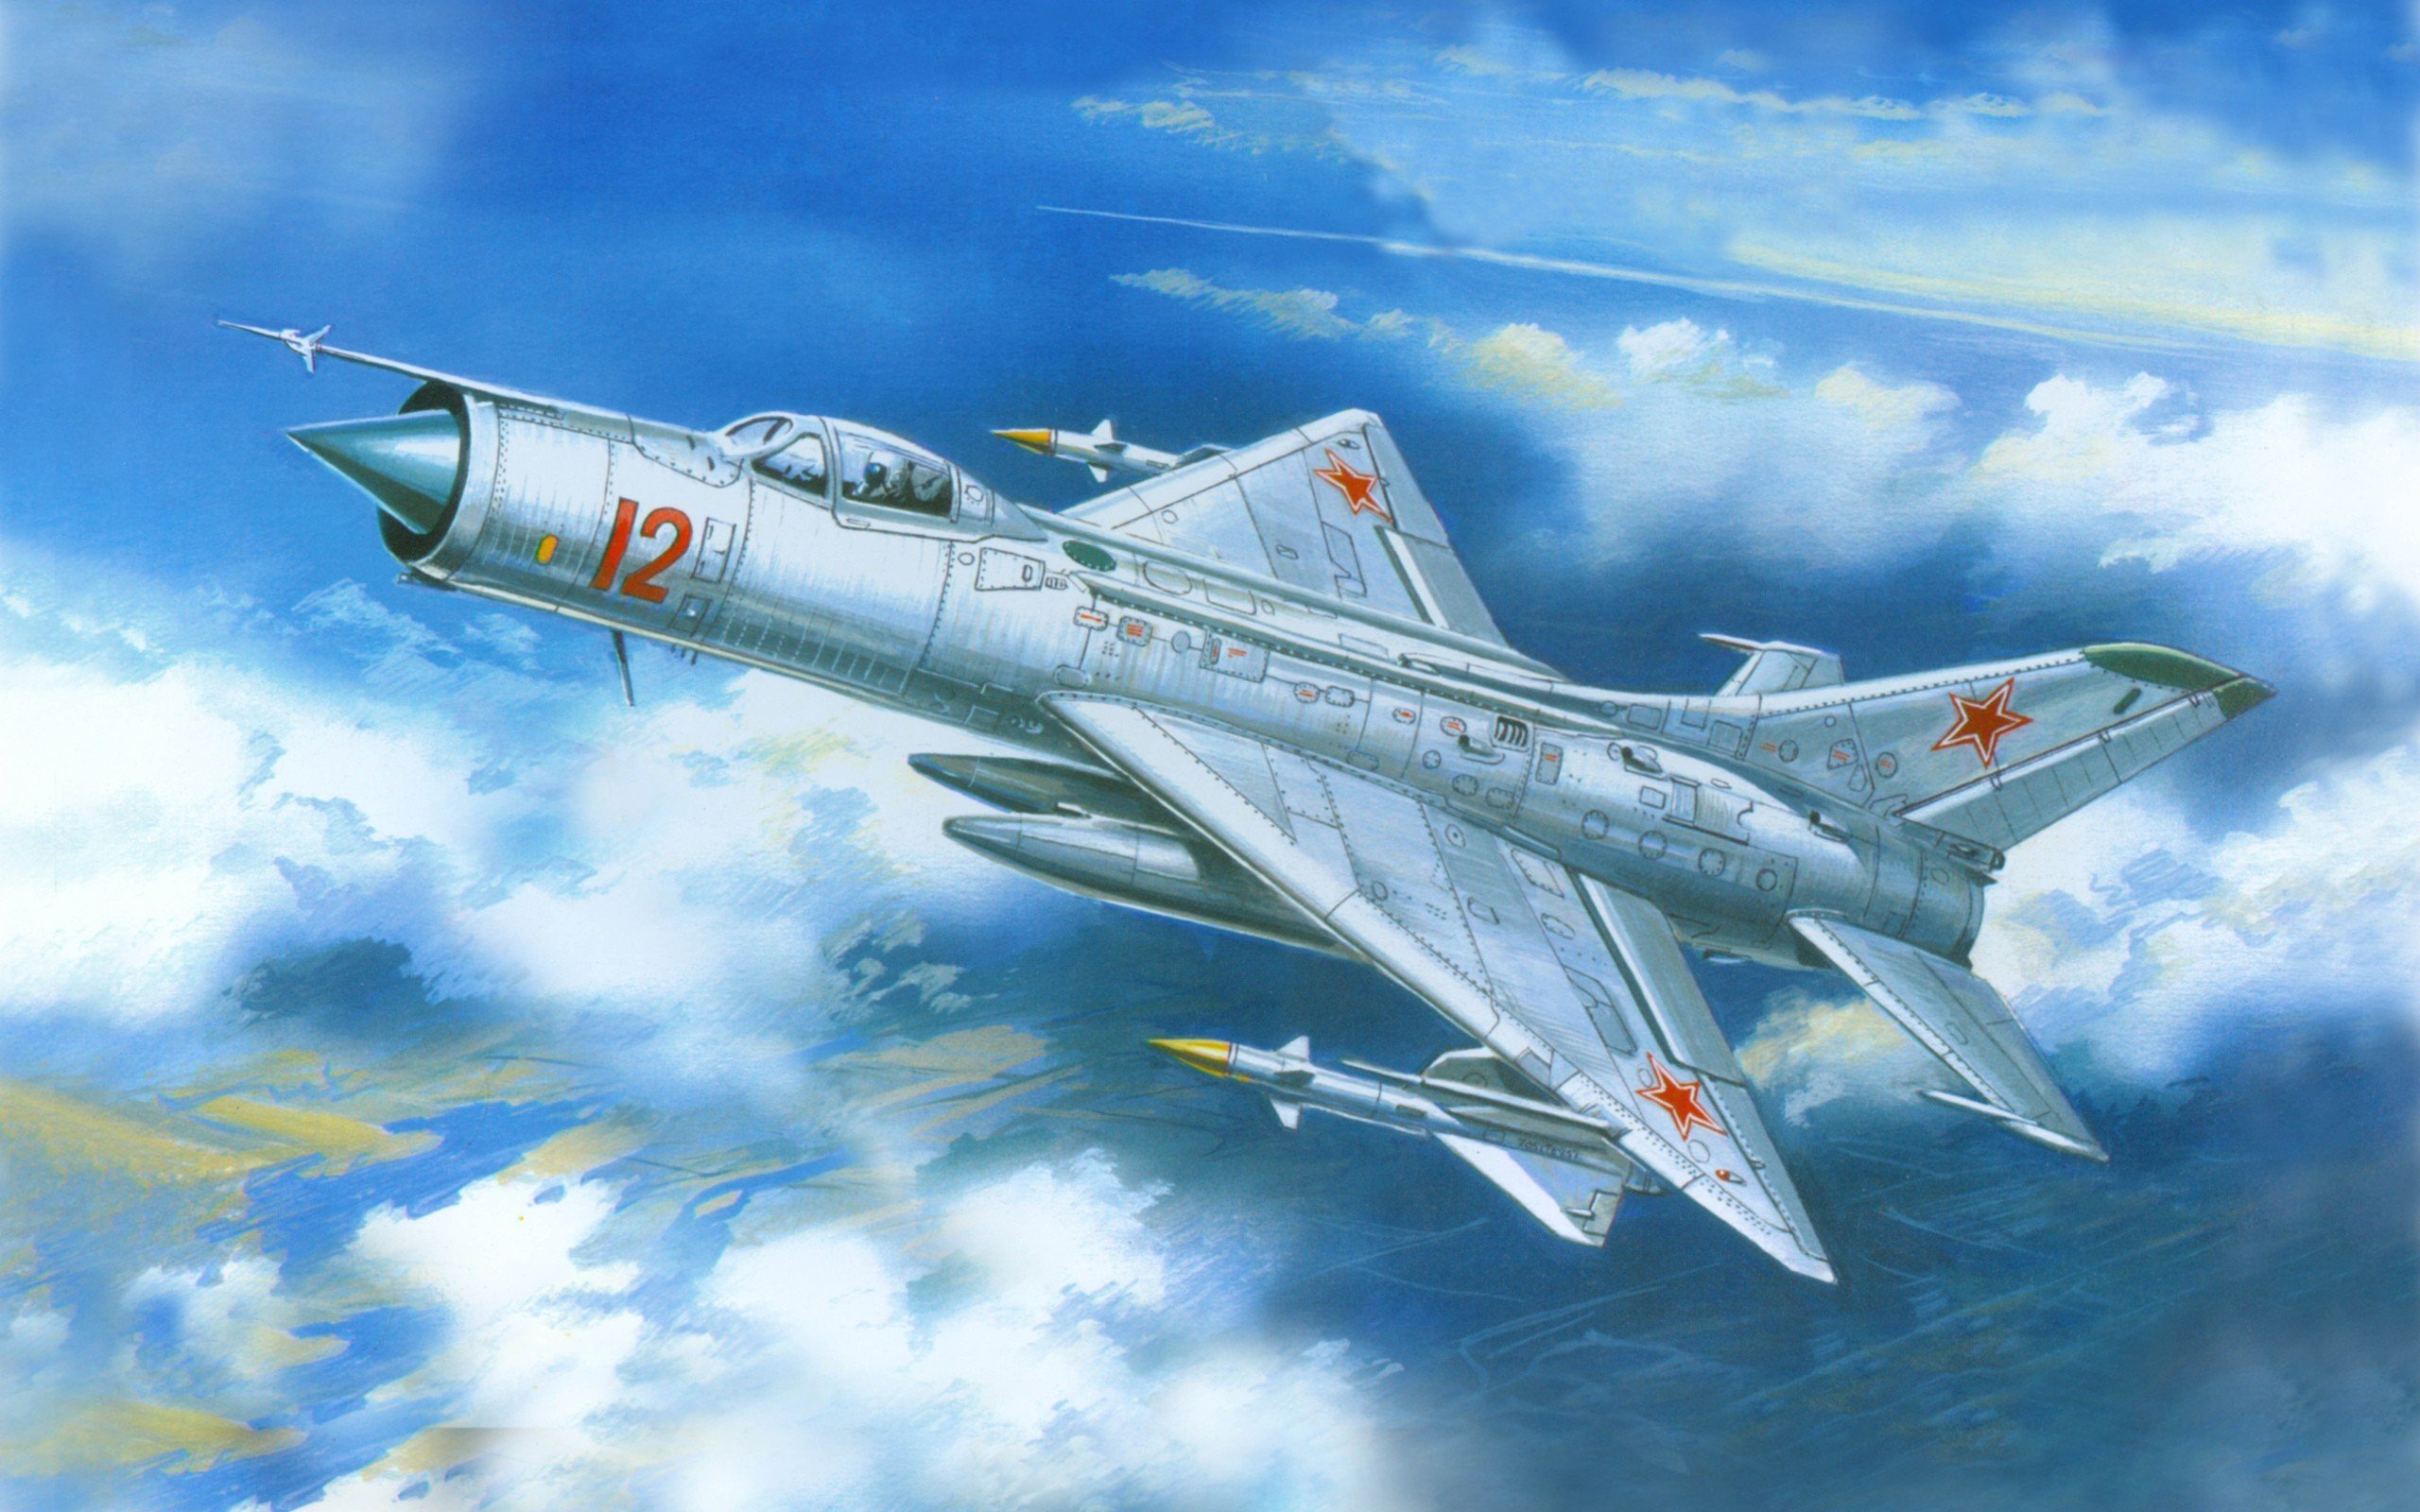 2560x1600 px Air Force aircraft Sukhoi Su High Quality Wallpaper, High Definition Wallpaper